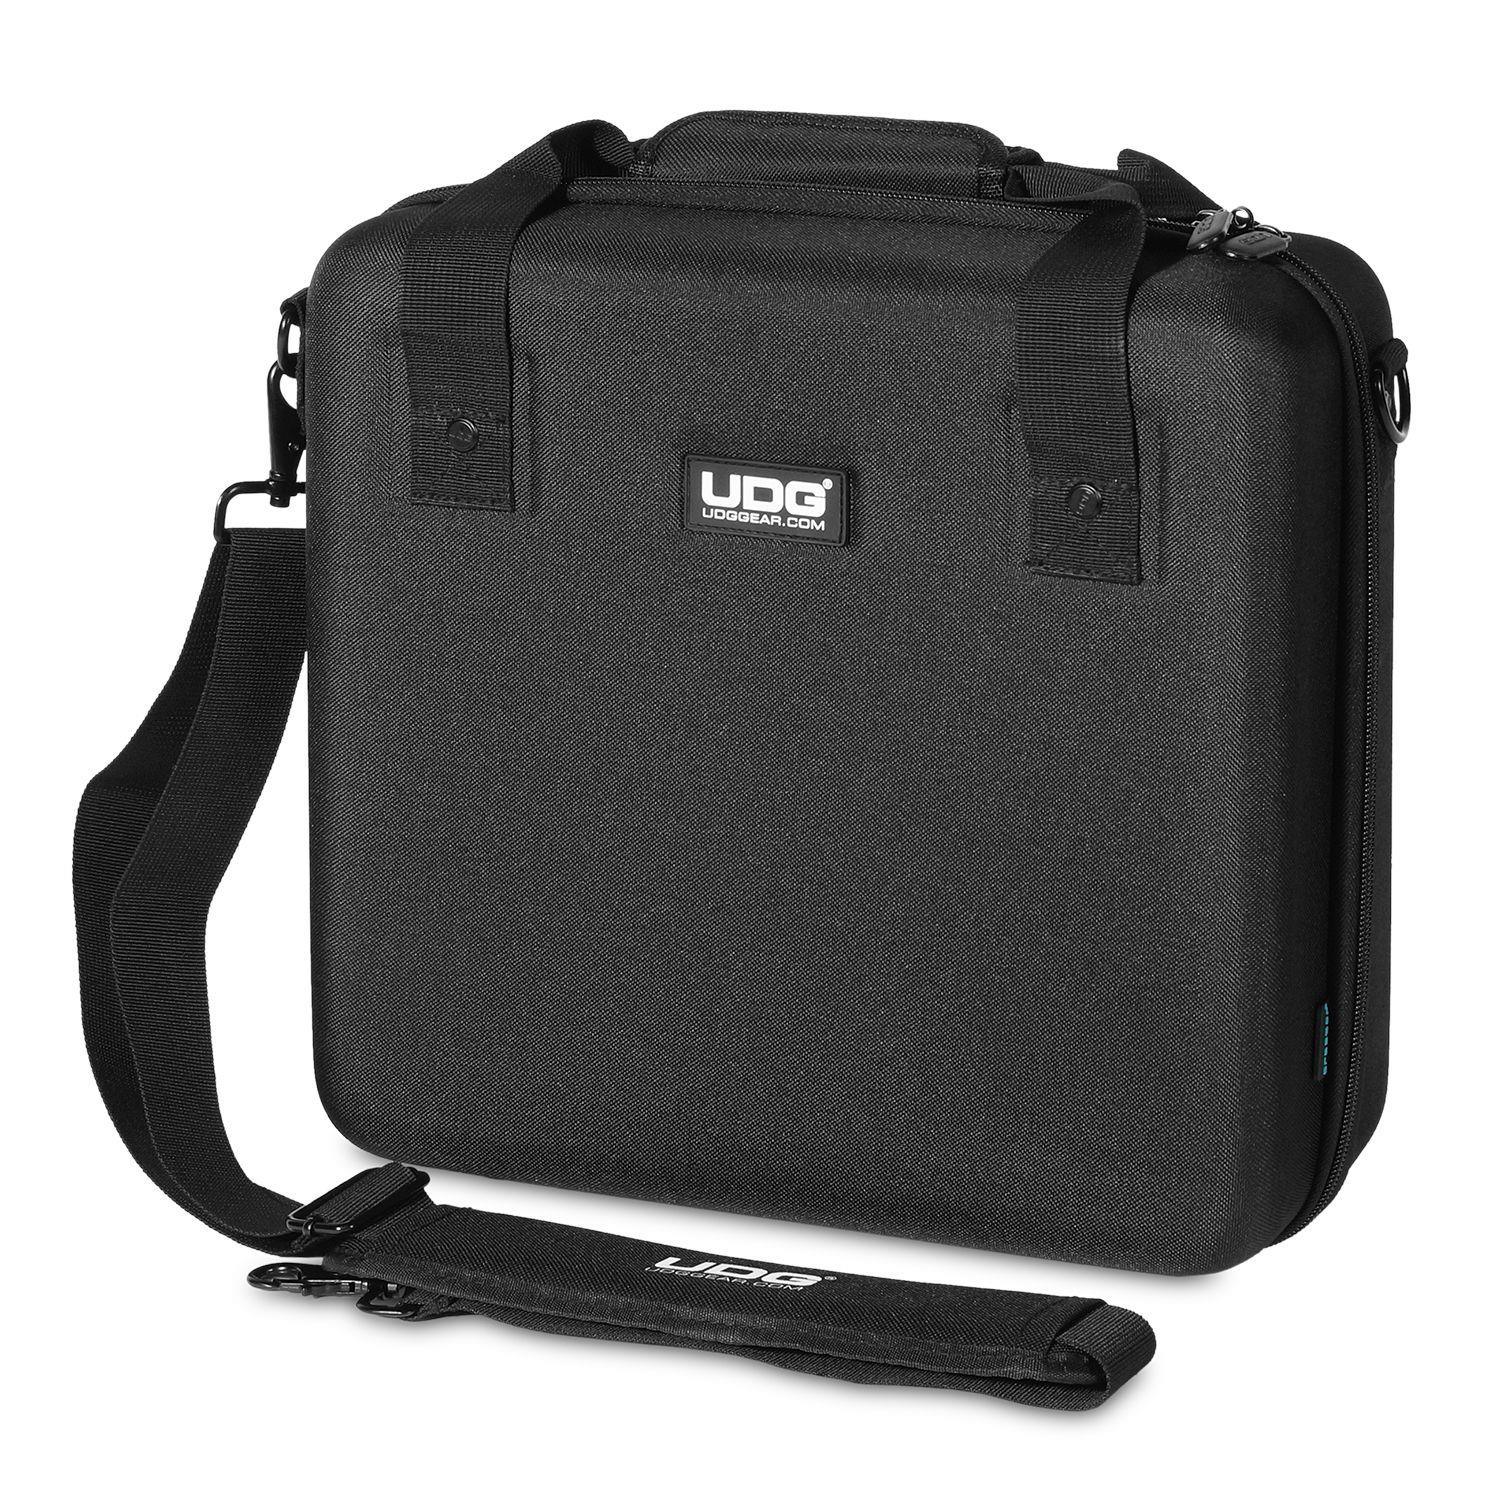 UDG Creator Pioneer XDJ-700 / Numark PT01 Scratch Turntable USB Hardcase Black - DY Pro Audio